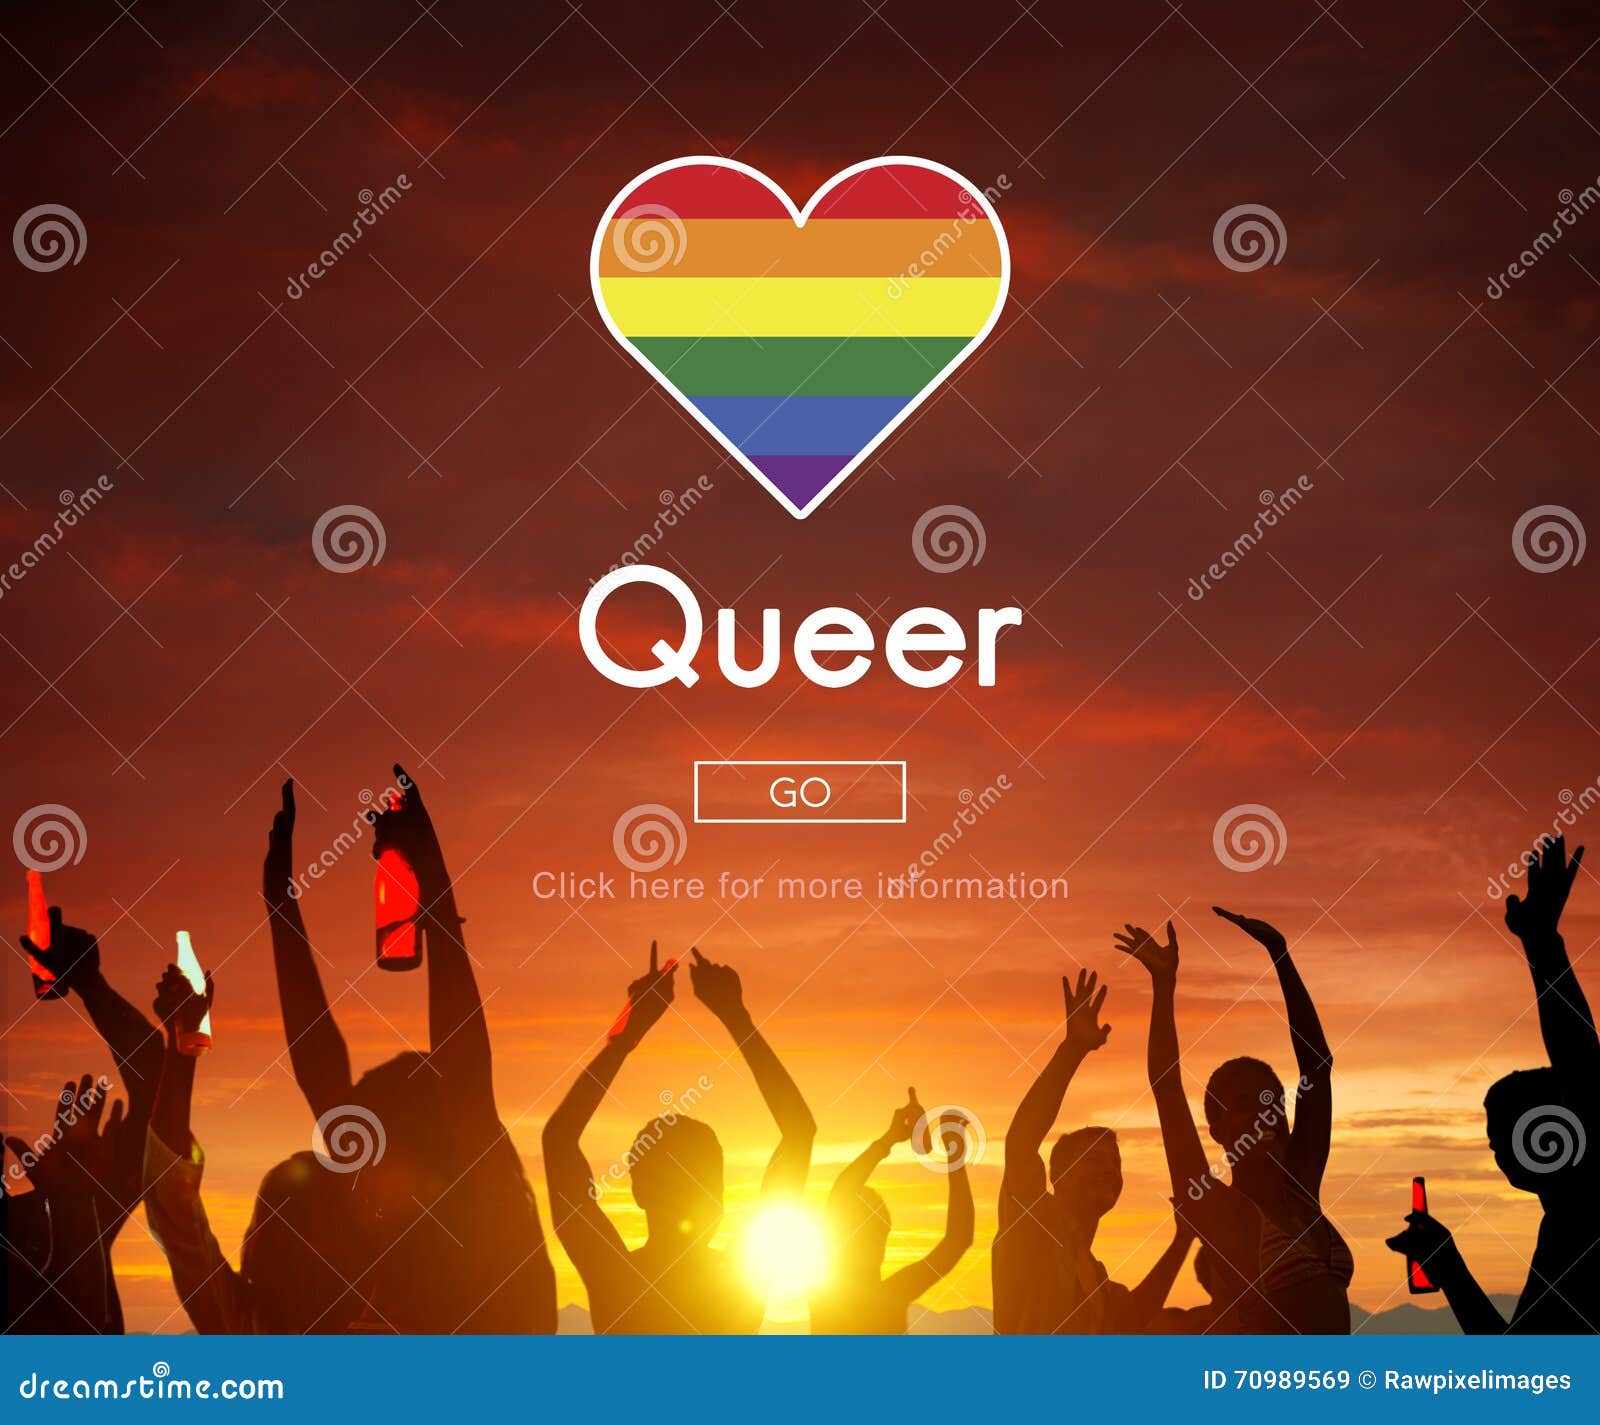 lgbt lesbian gay bisexual transgender concept